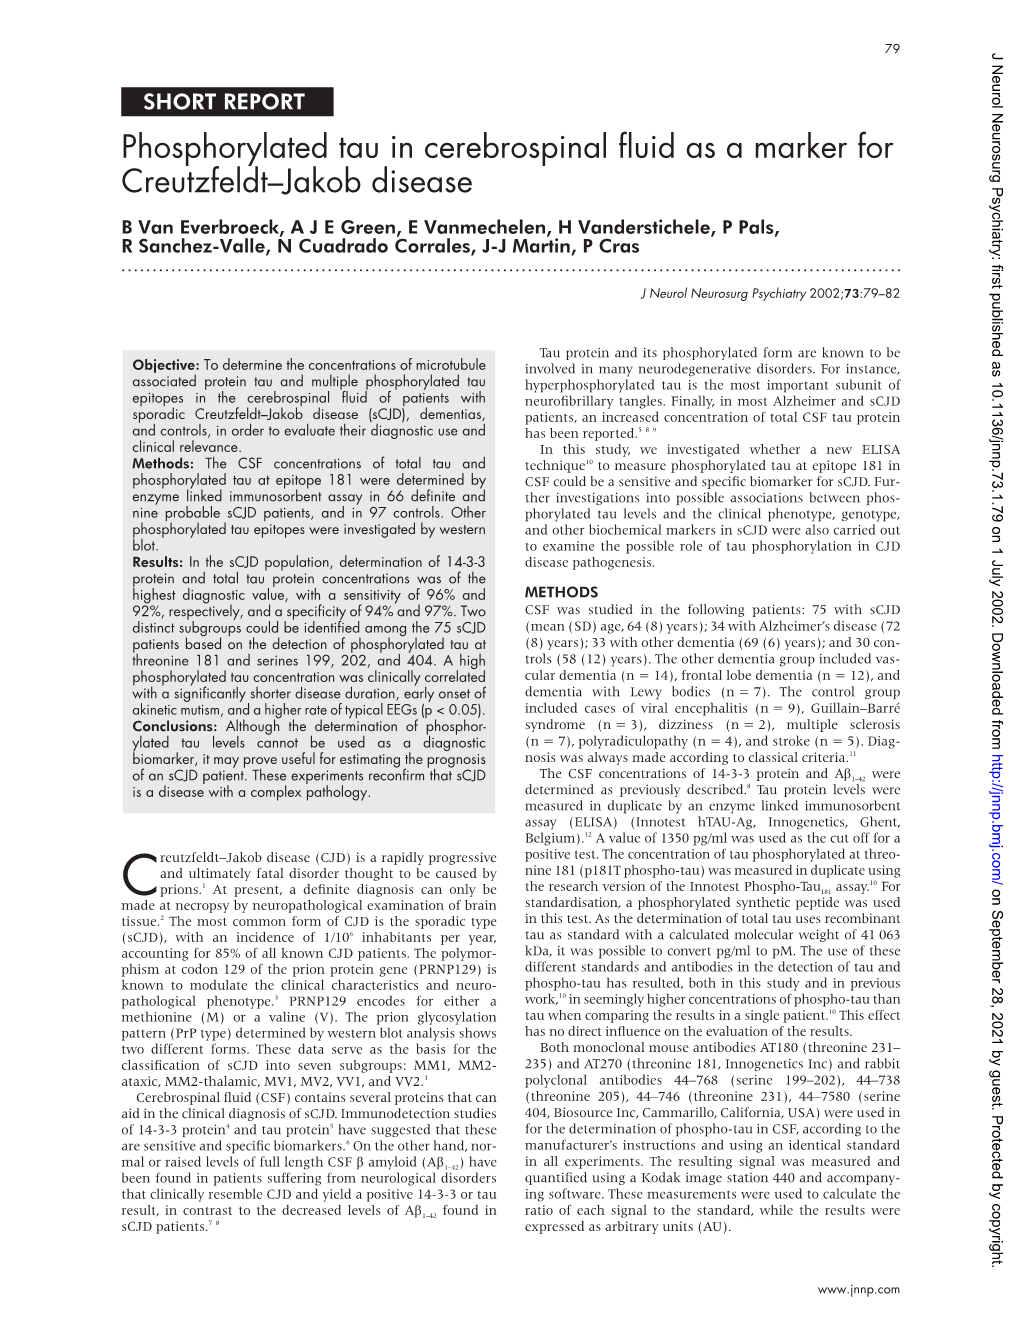 Phosphorylated Tau in Cerebrospinal Fluid As a Marker for Creutzfeldt